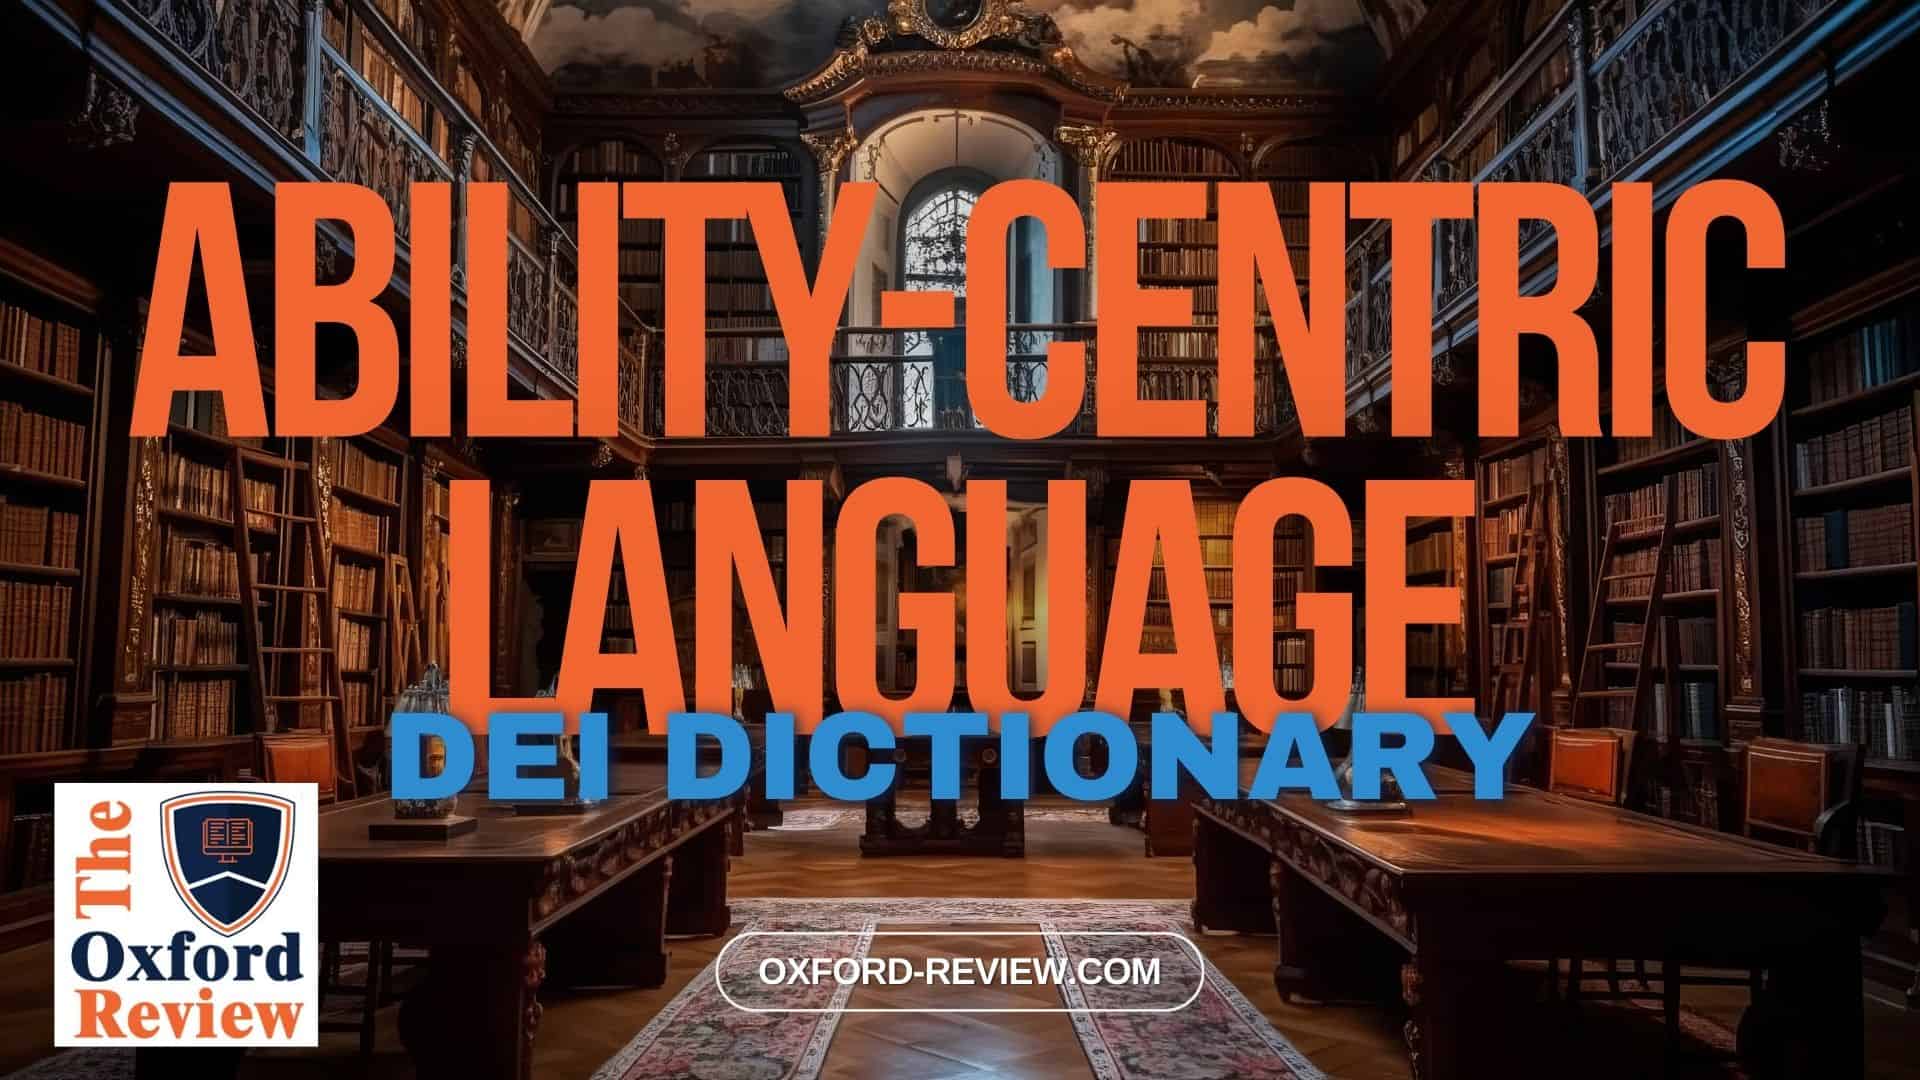 Ability-Centric Language